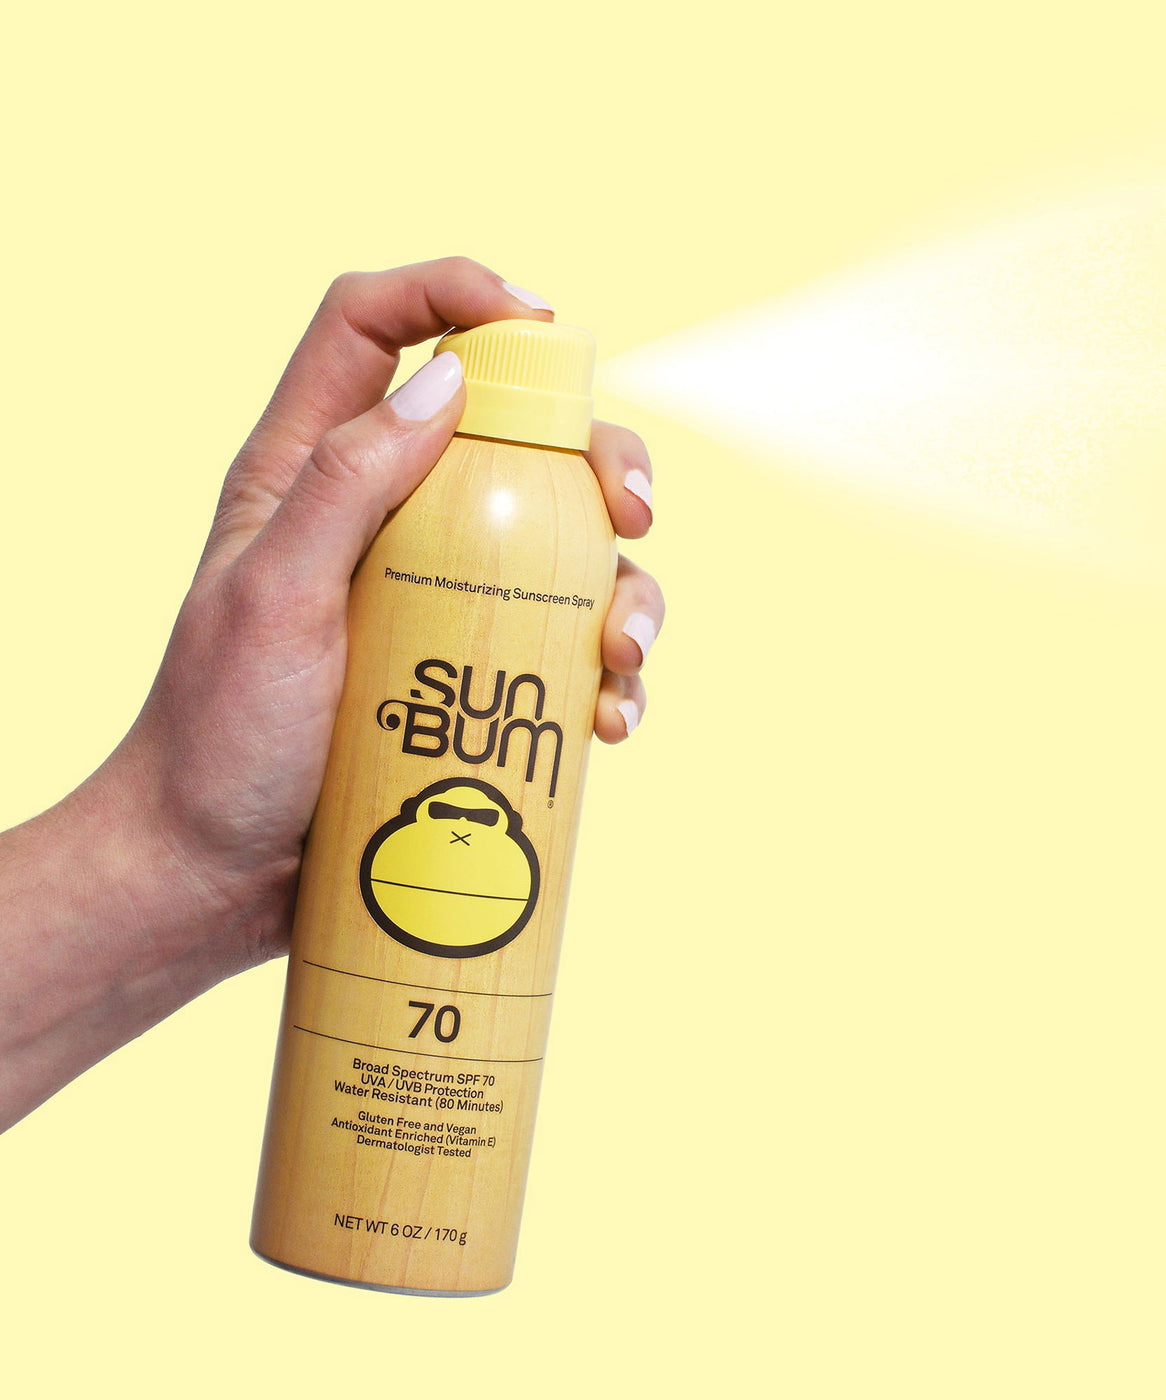 Sun Bum Original SPF 70 Sunscreen Spray